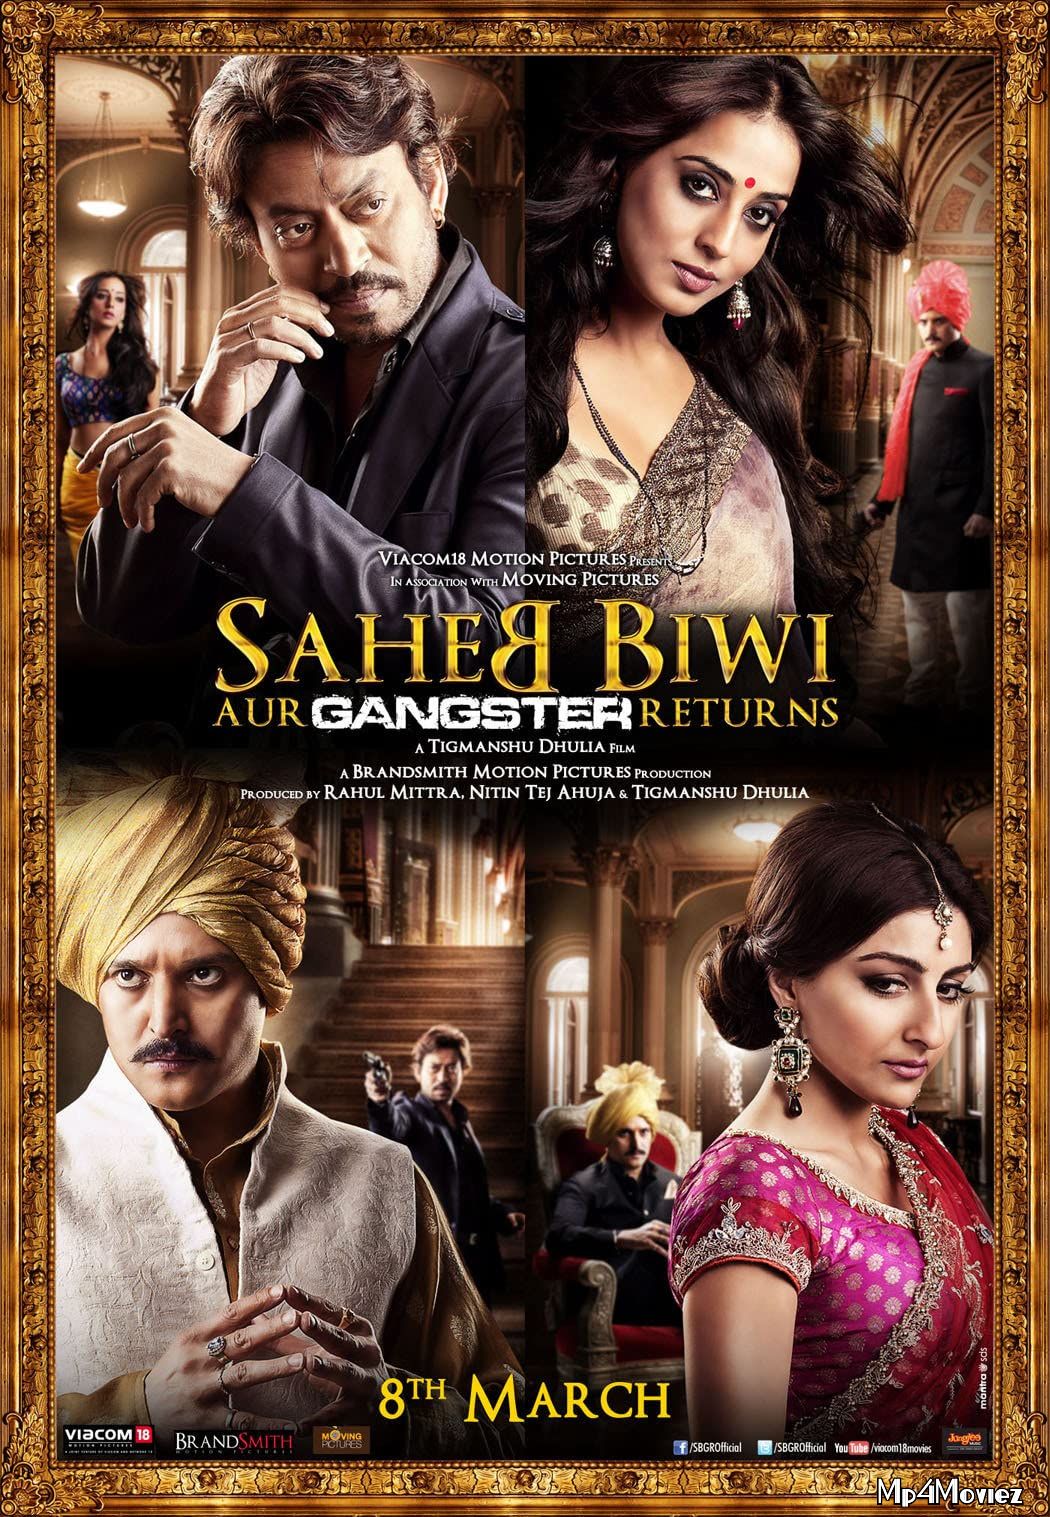 Saheb Biwi Aur Gangster Returns (2013) Hindi BluRay download full movie